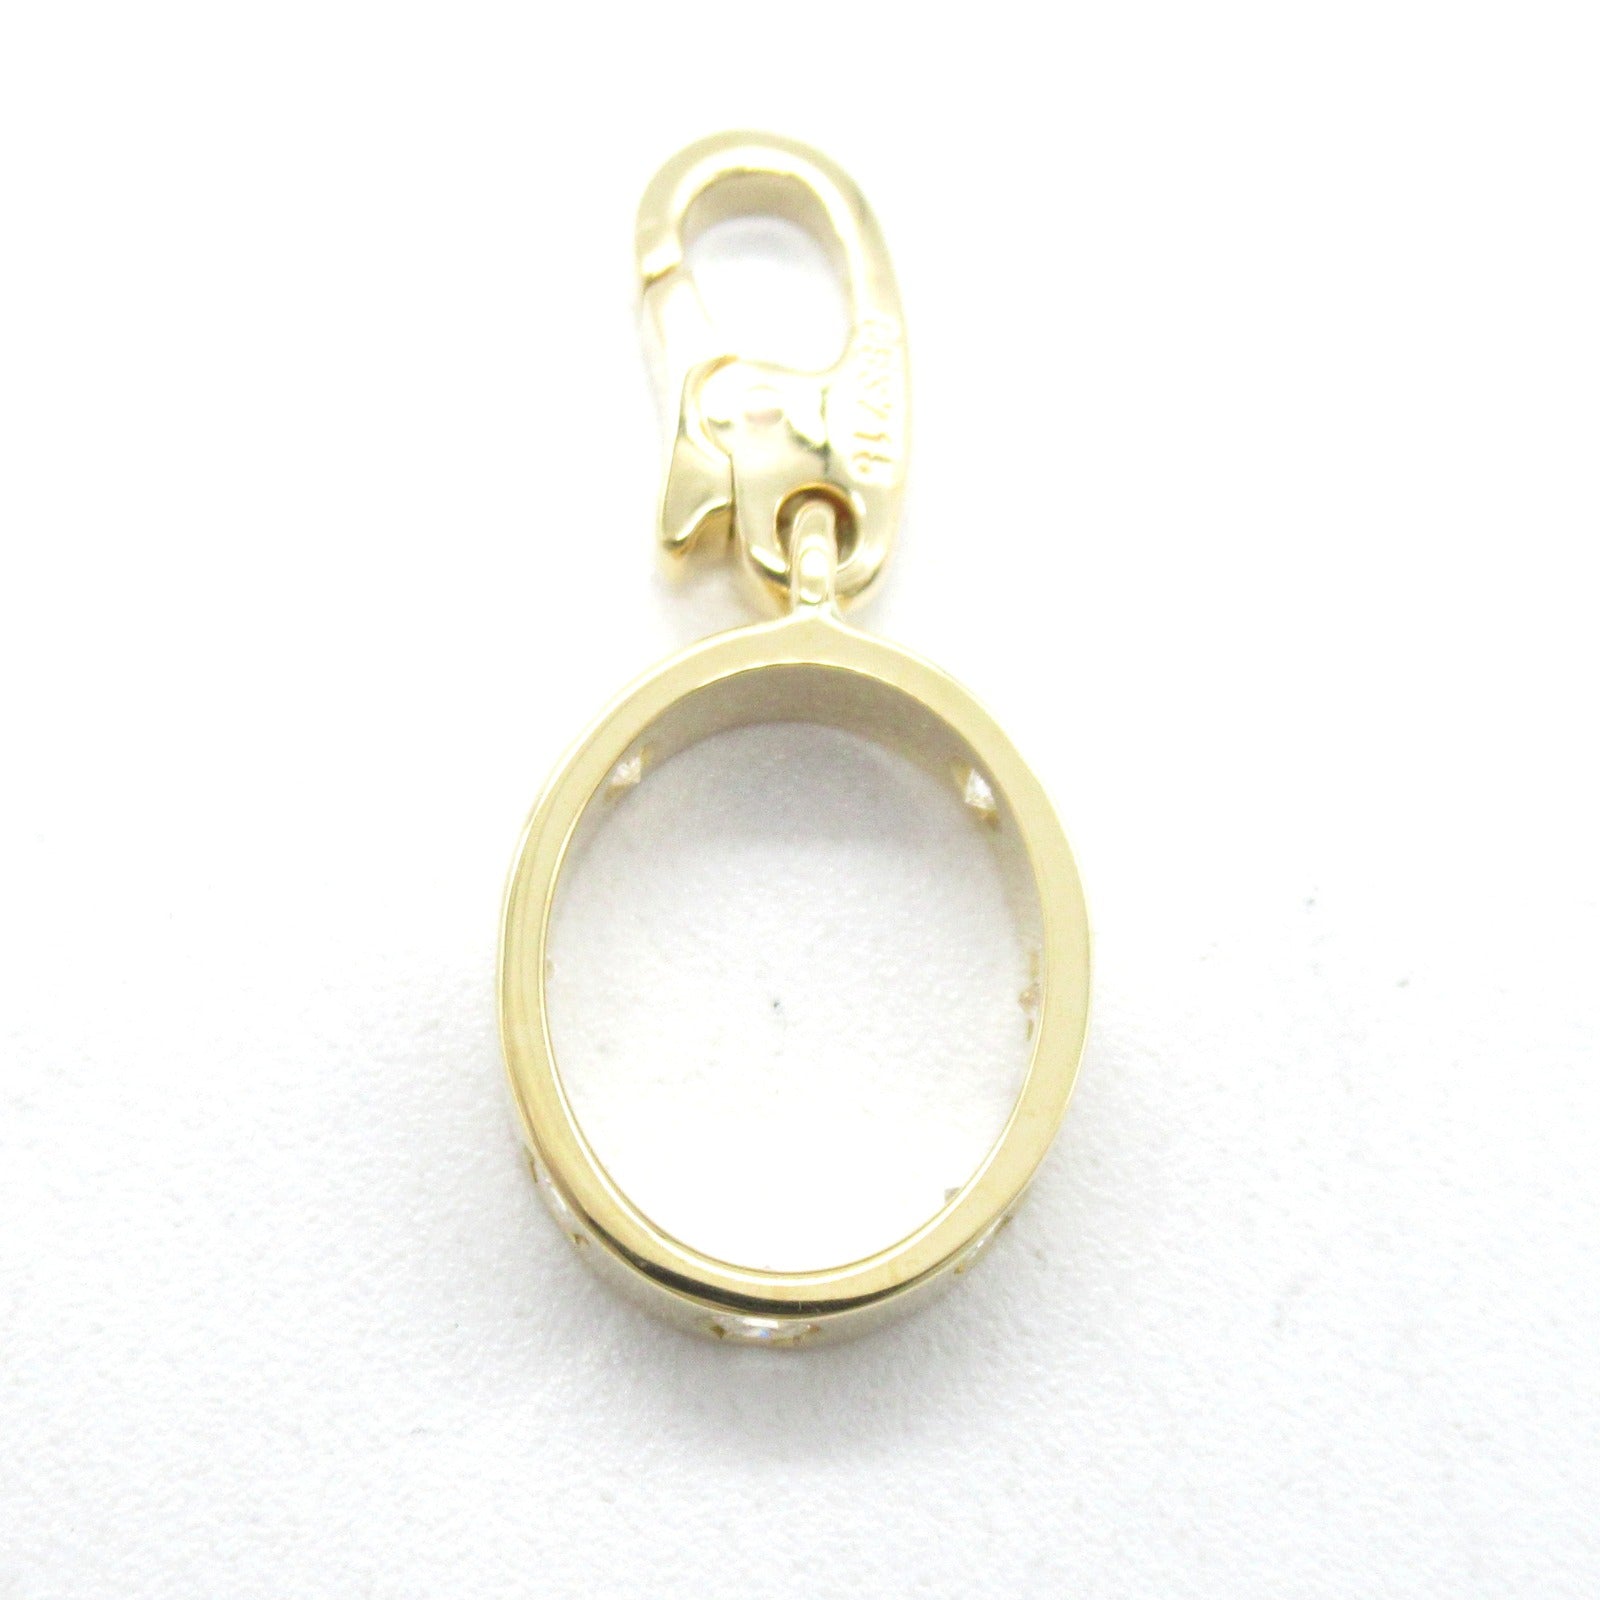 Cartier Cartier  Diamond Charm Pendant Top Jewelry K18 (yellow g) Diamond   Clearance